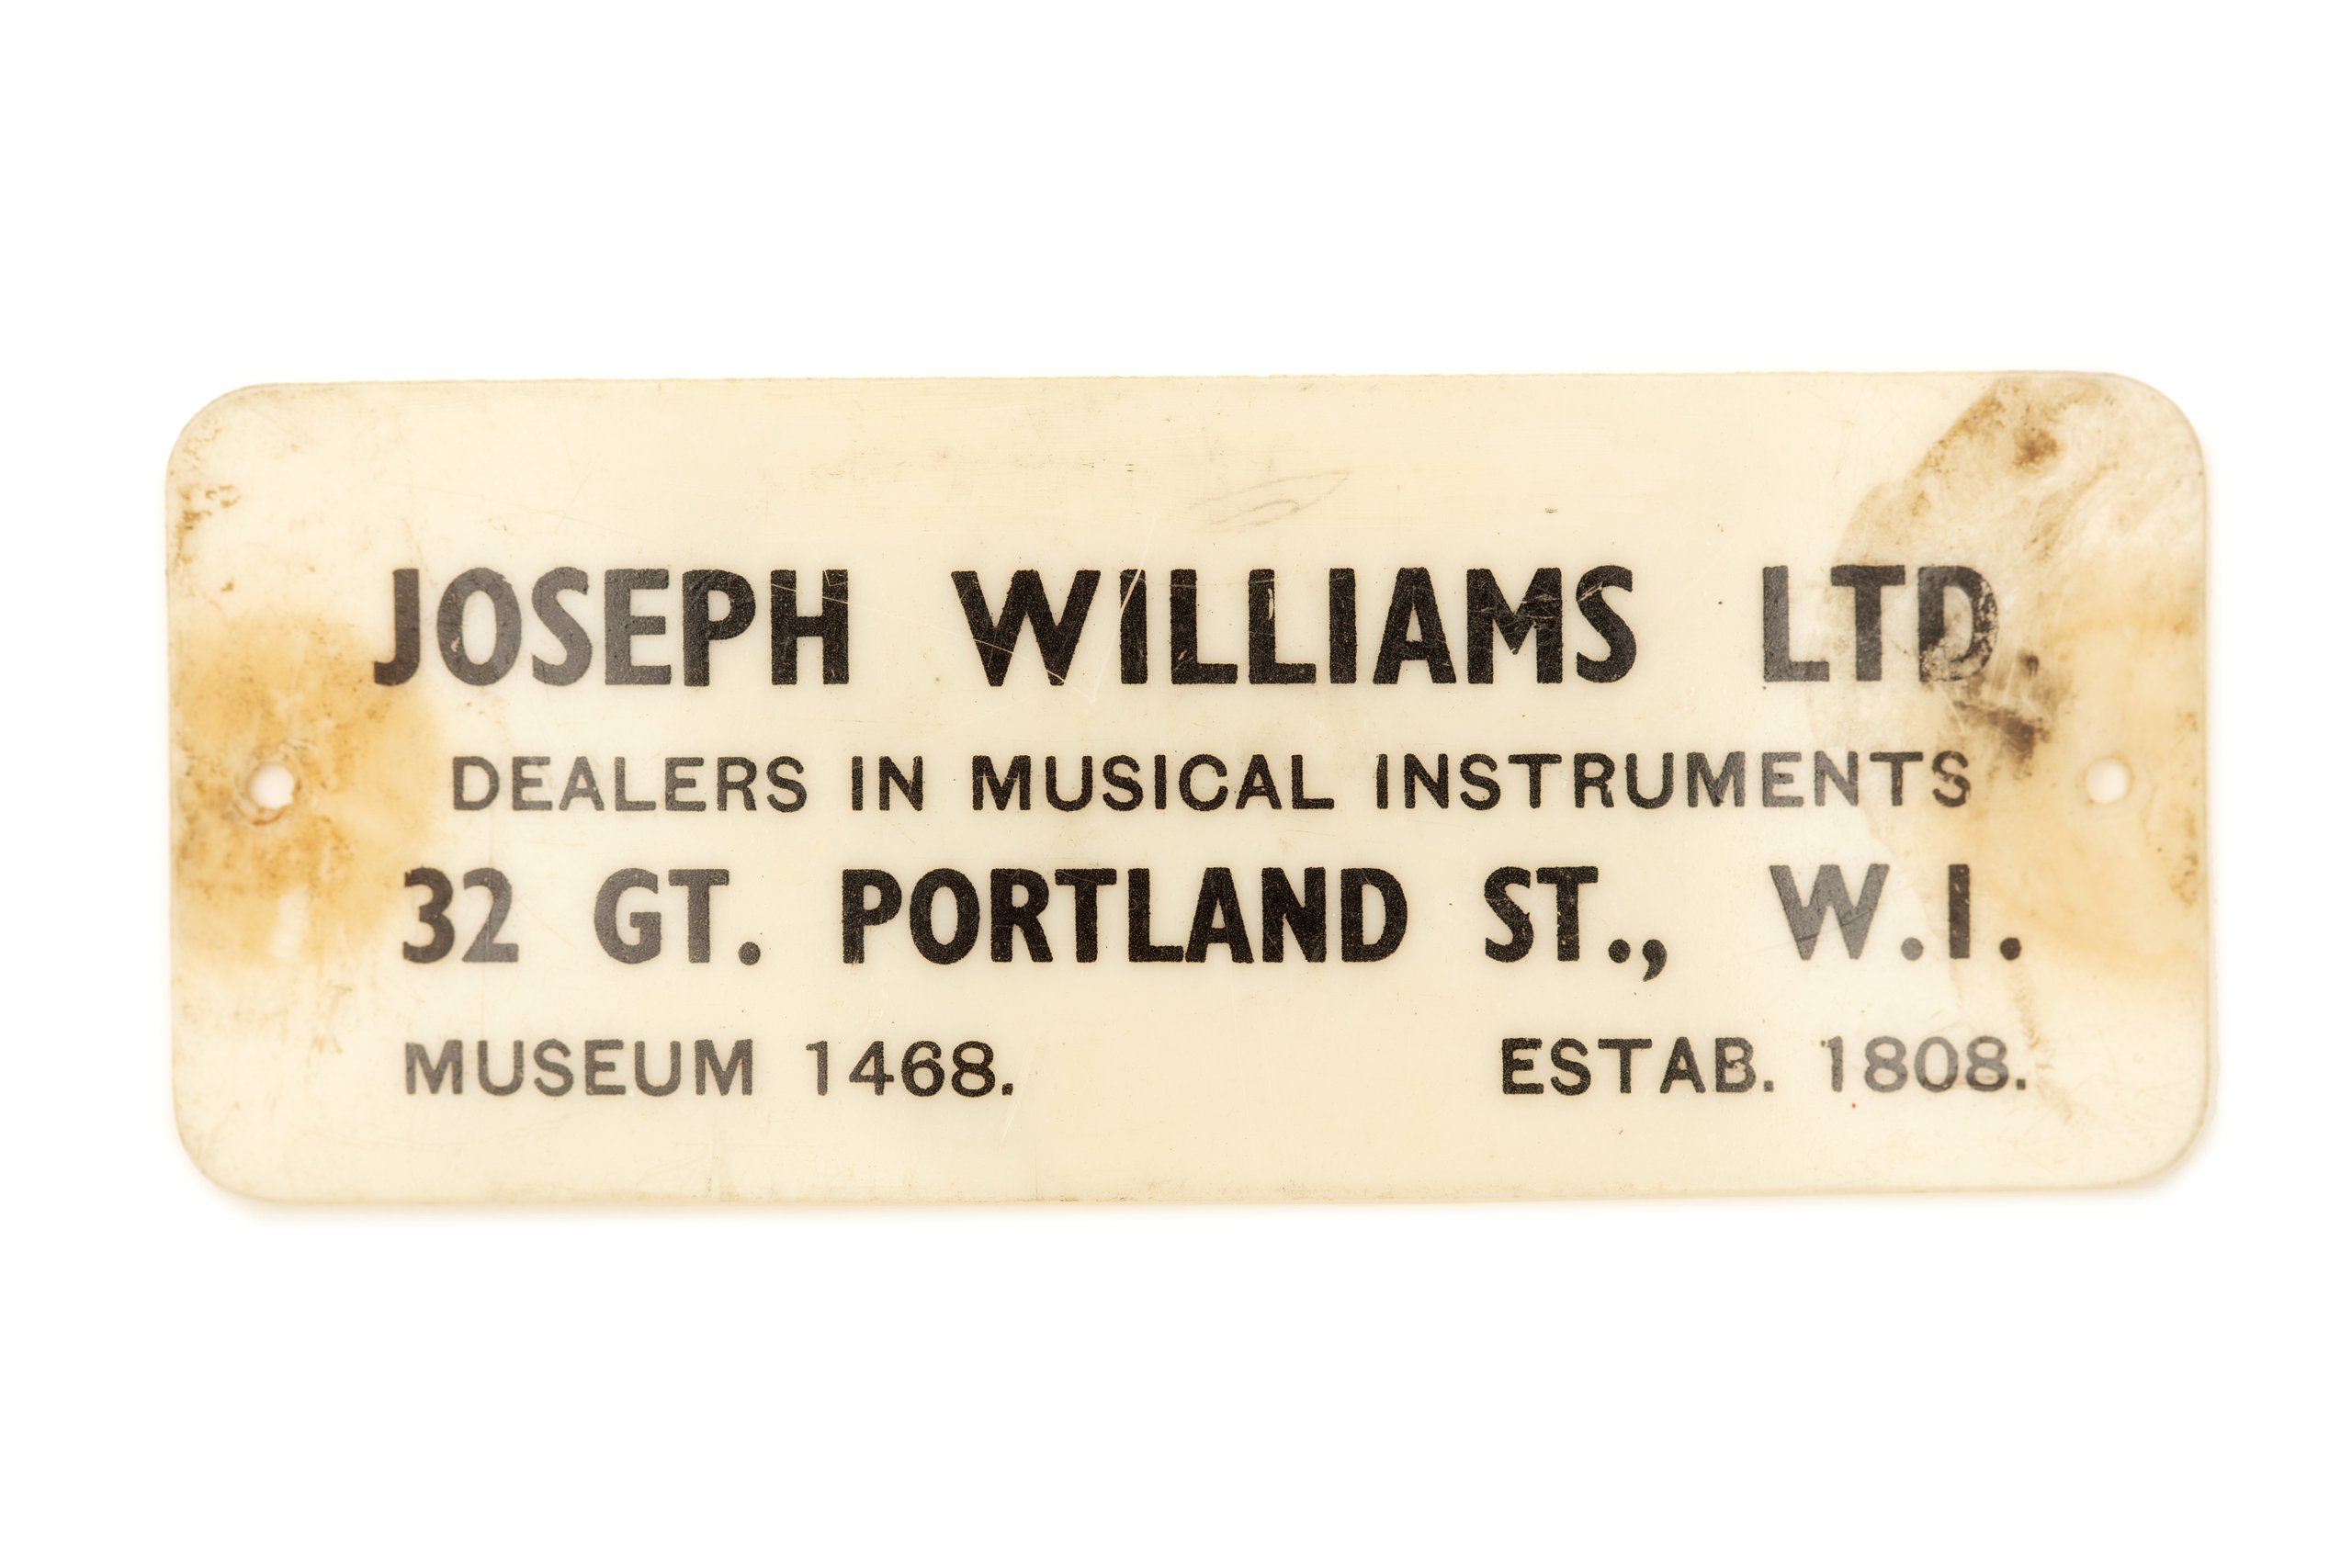 Made	Joseph Williams Ltd	Greater London, England, United Kingdom, Europe		1900-1970	1900	1970